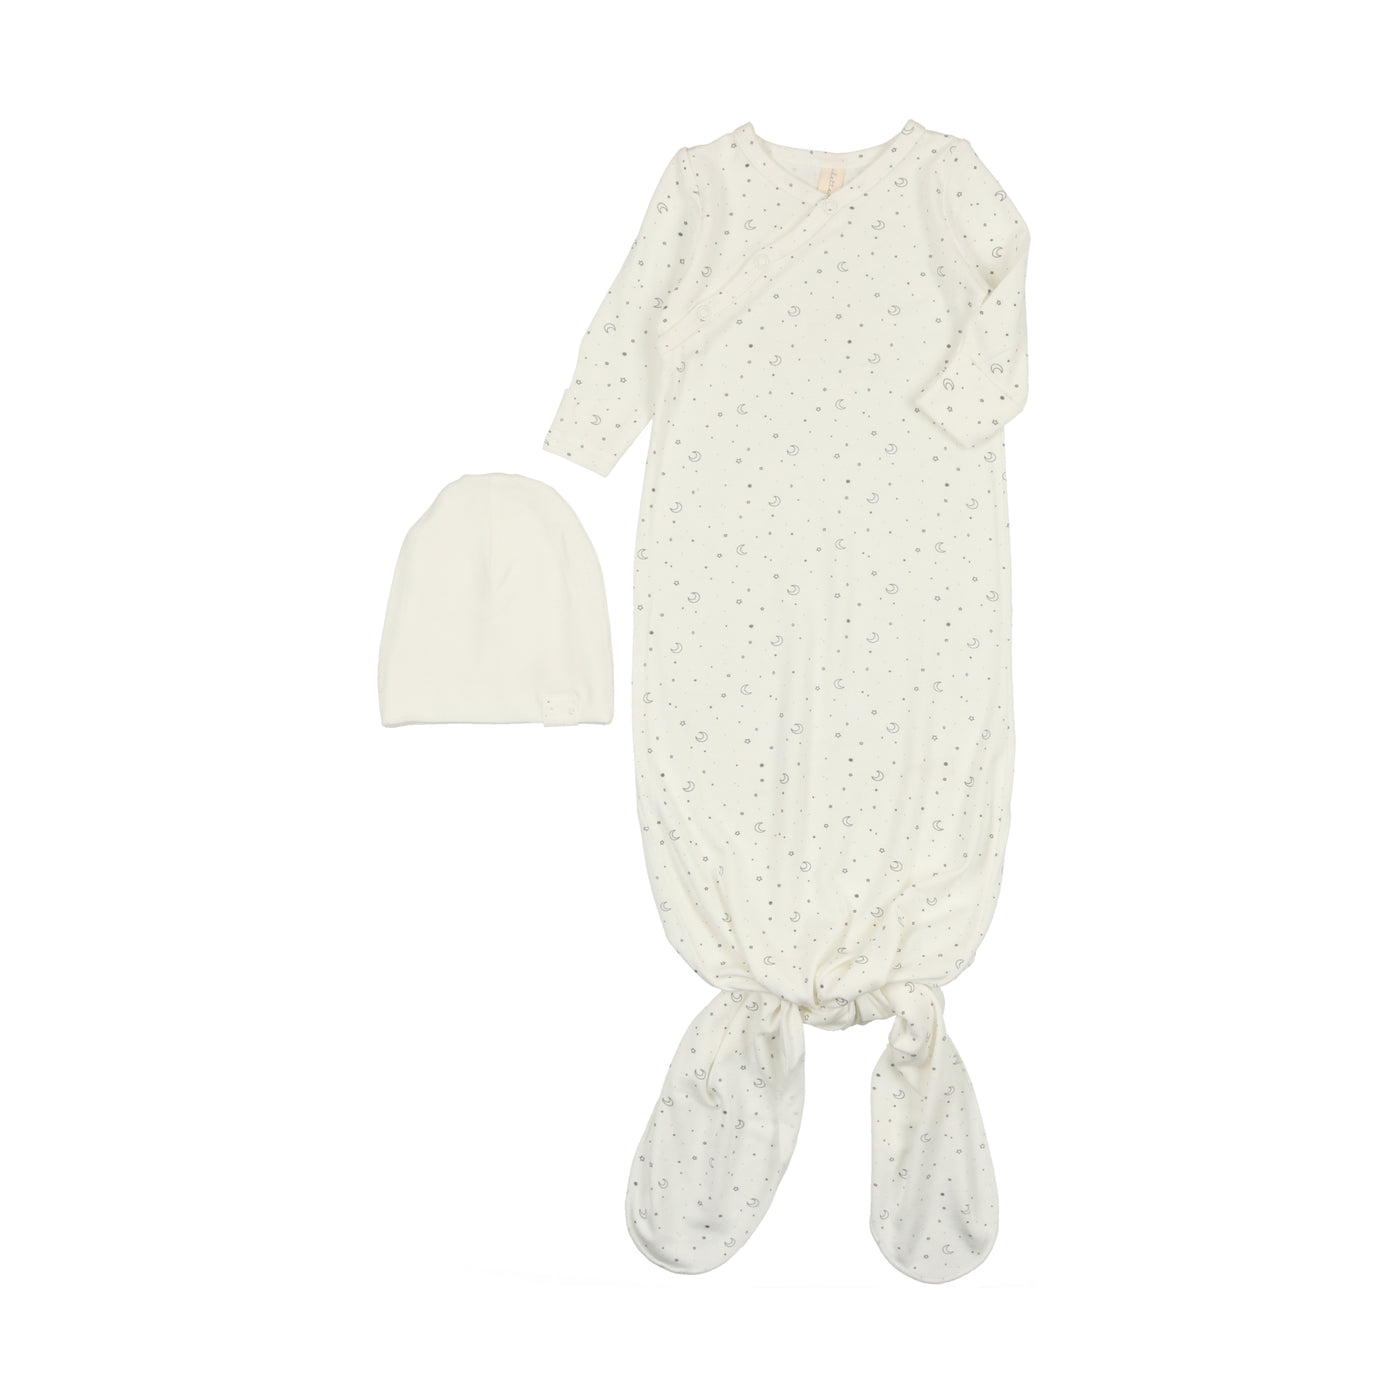 Lilette Starry Night White/Steel Gown/Knot Hat/Blanket Set